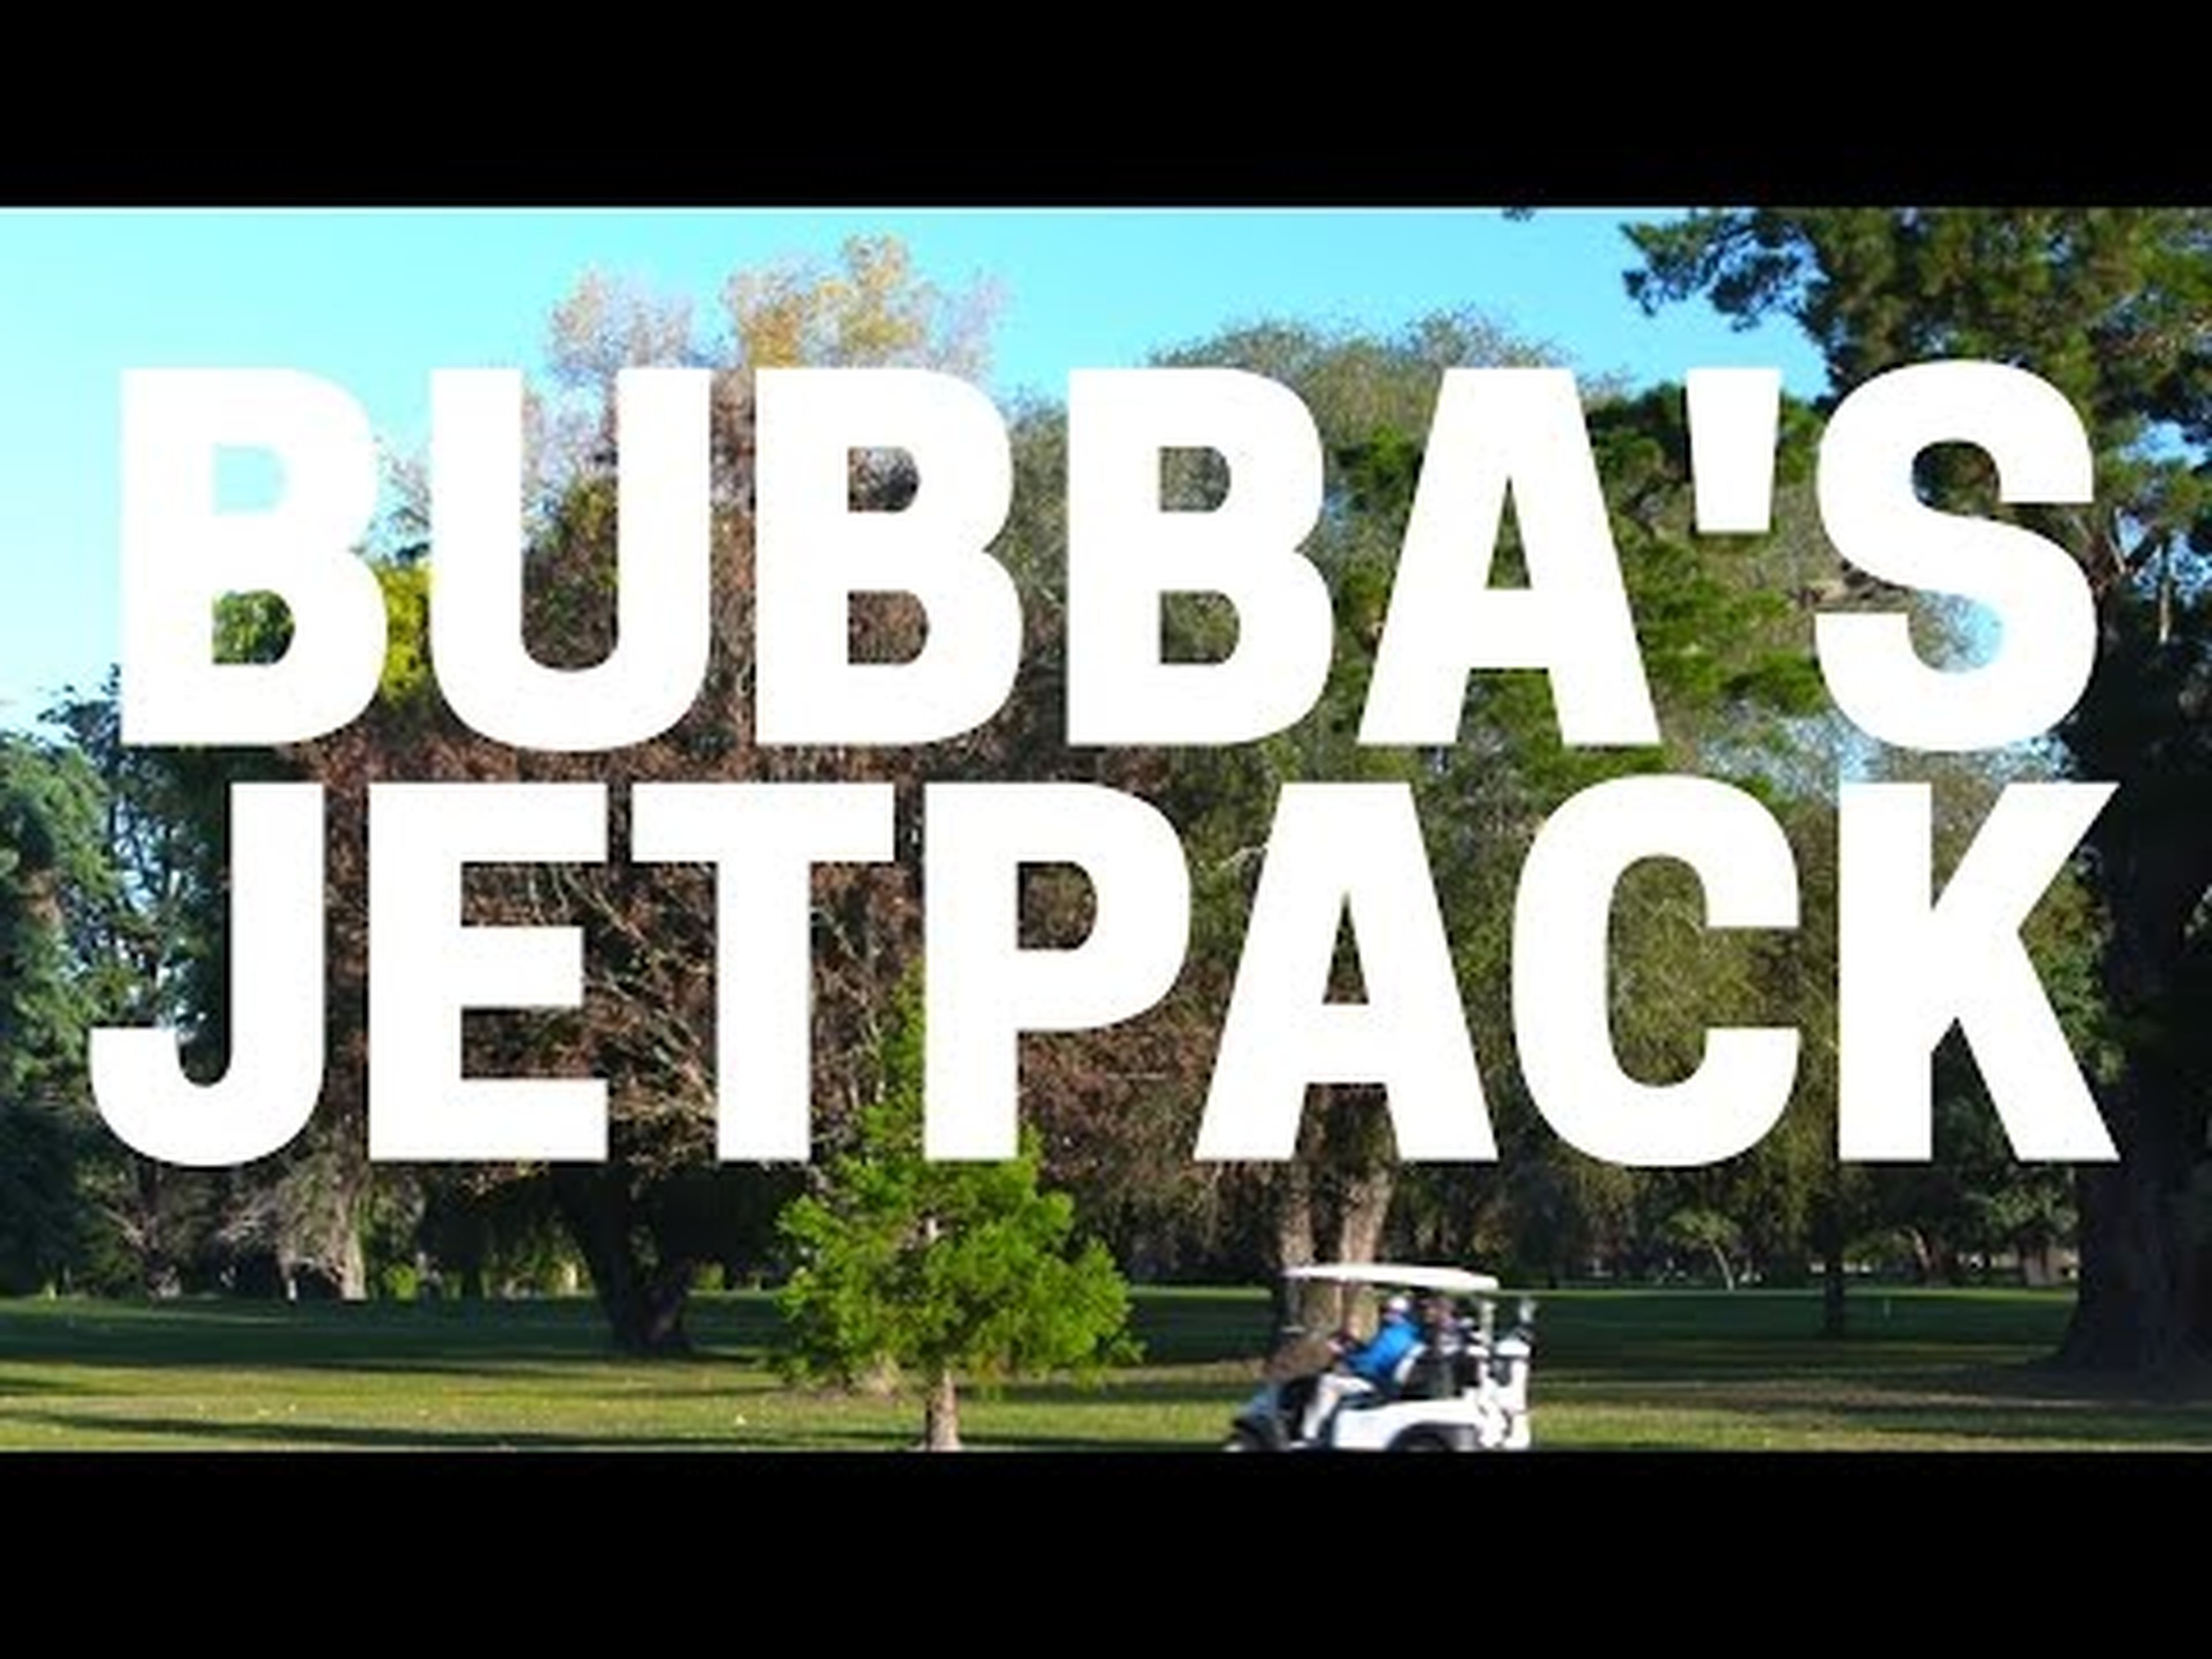 Bubba's Jetpack